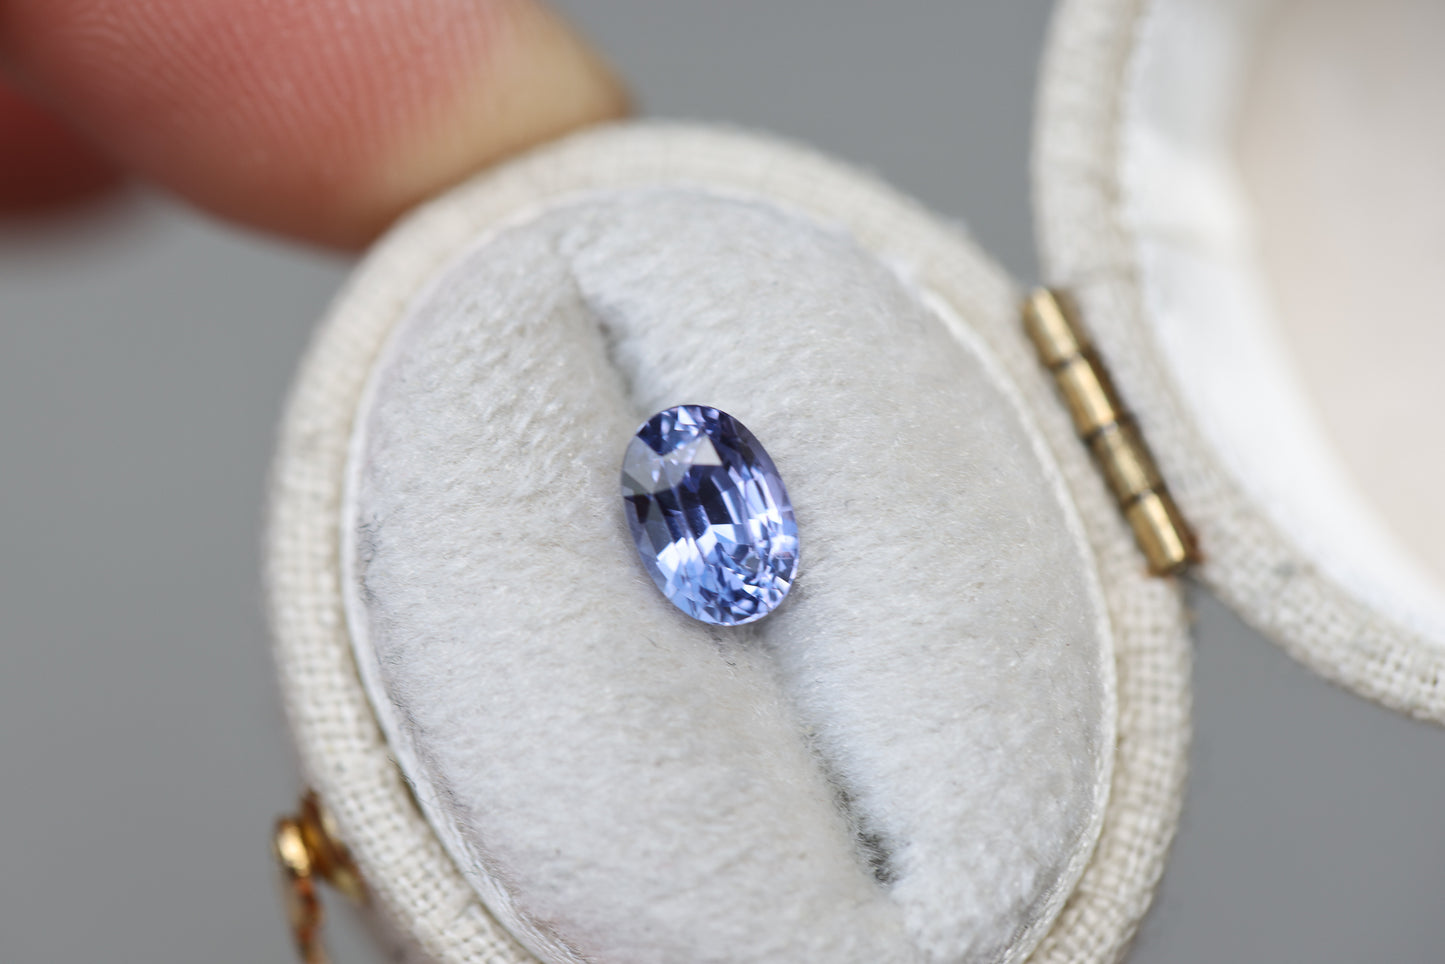 1.3ct oval blue sapphire